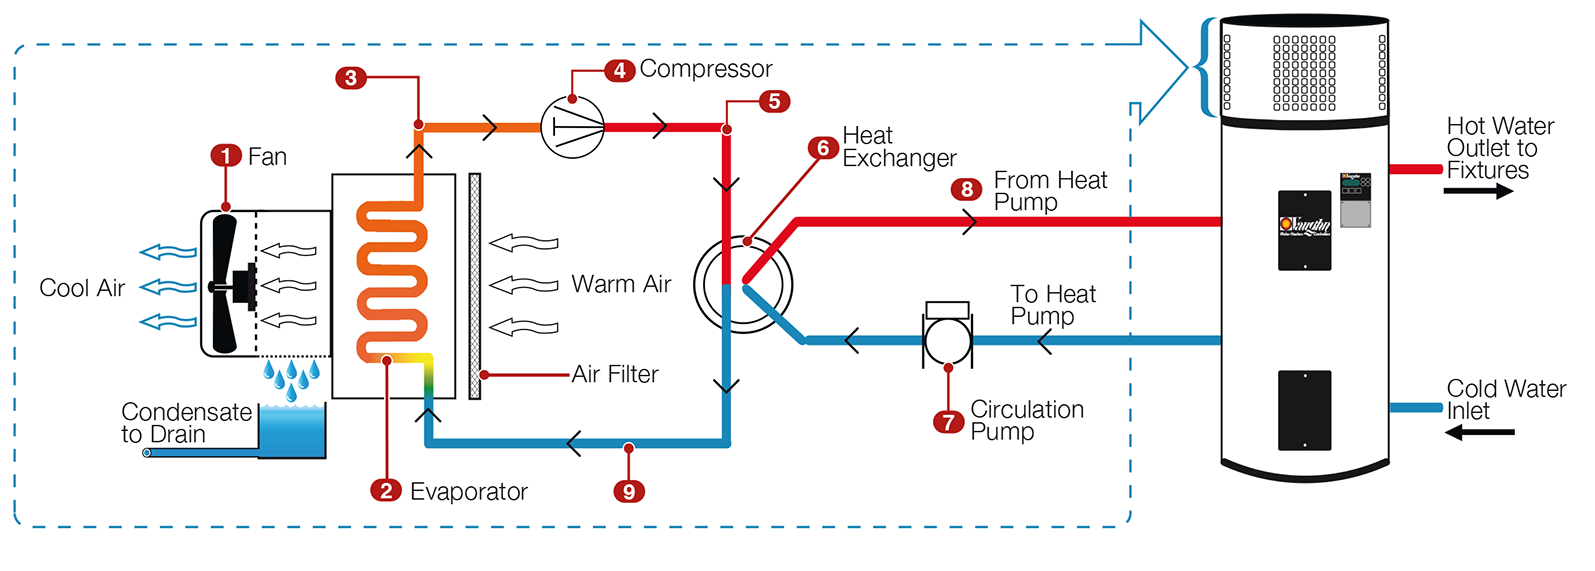 High Efficiency Electric Water Heater - Vaughn - Electric Hot Water Heater Wiring Diagram